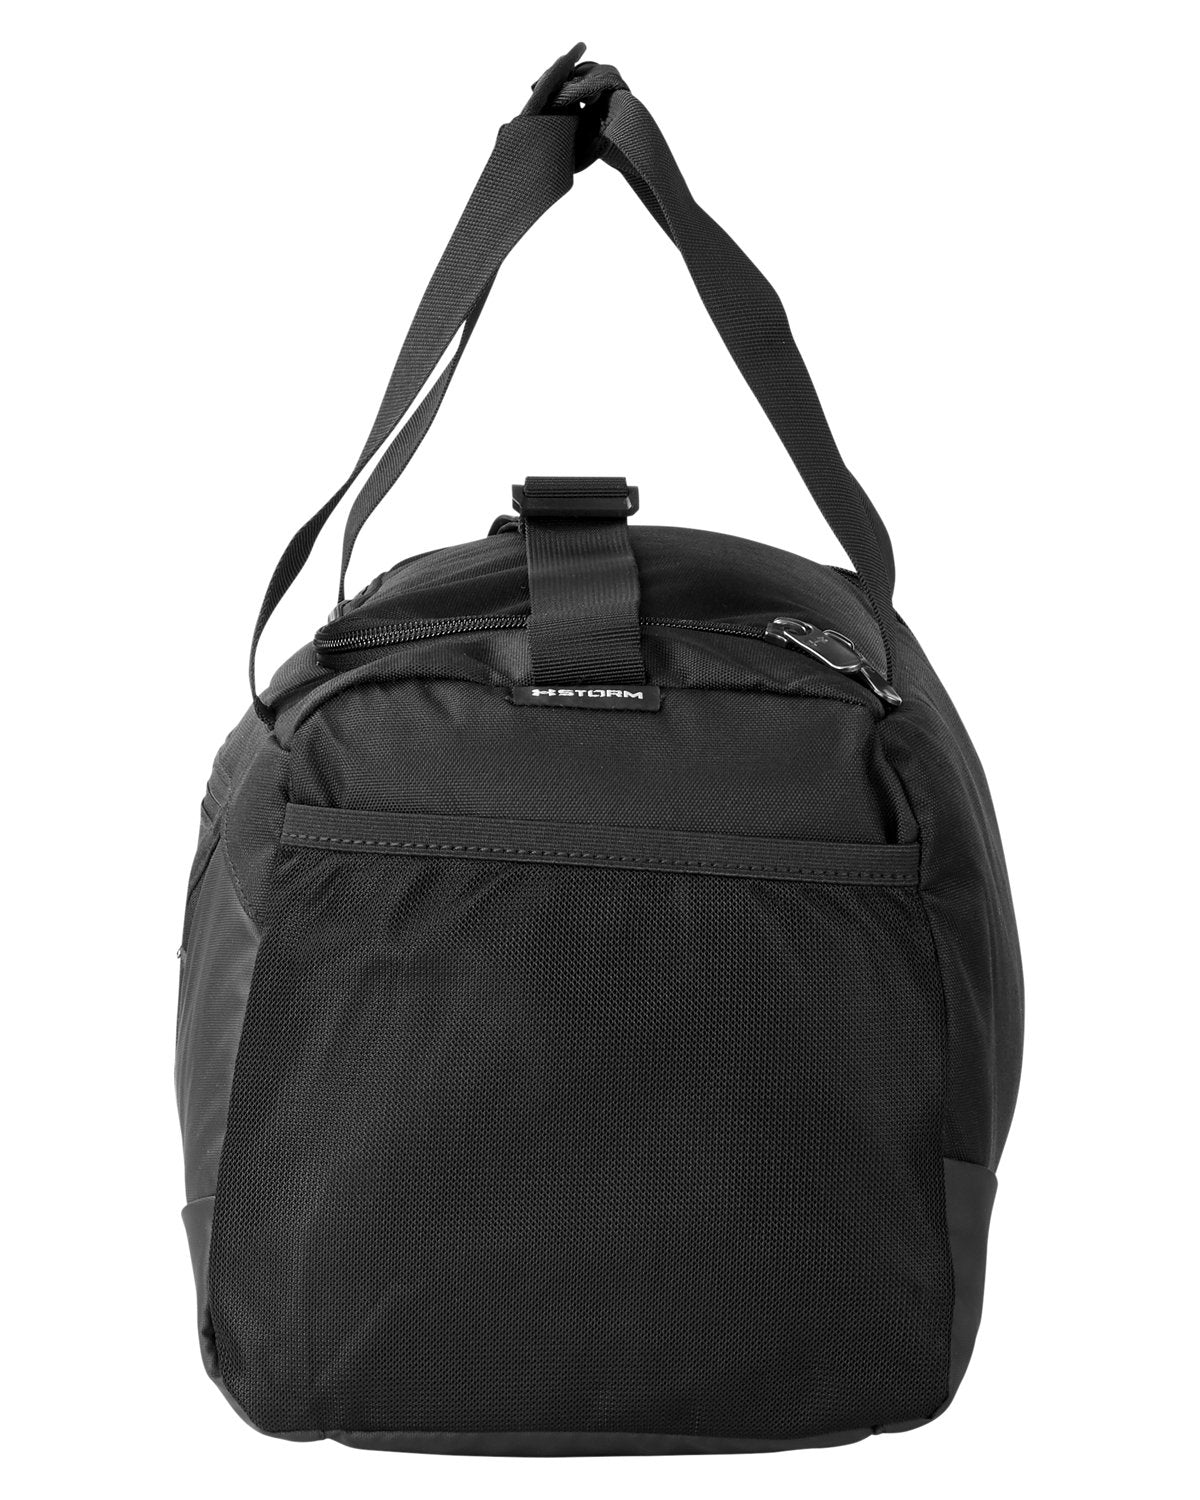 Under Armour Undeniable 5.0 XS Custom Duffel Bags, Black